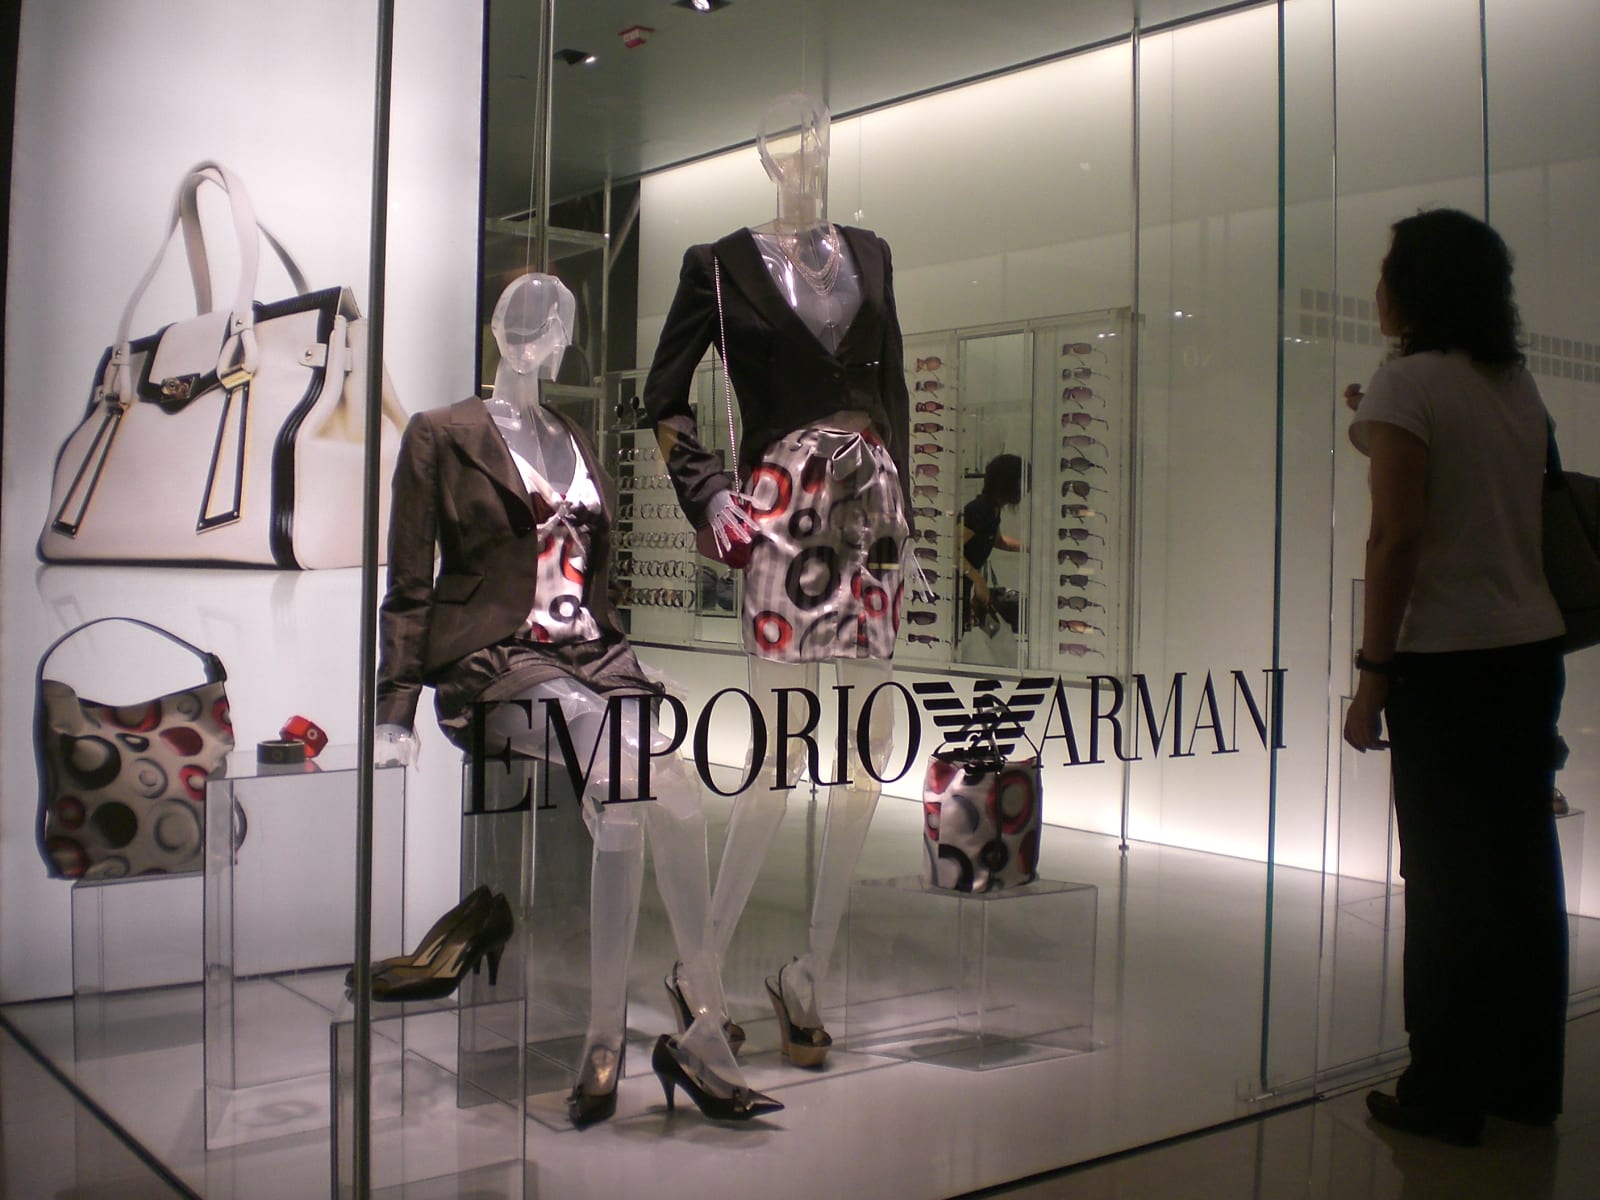 Is Emporio Armani a luxury brand?